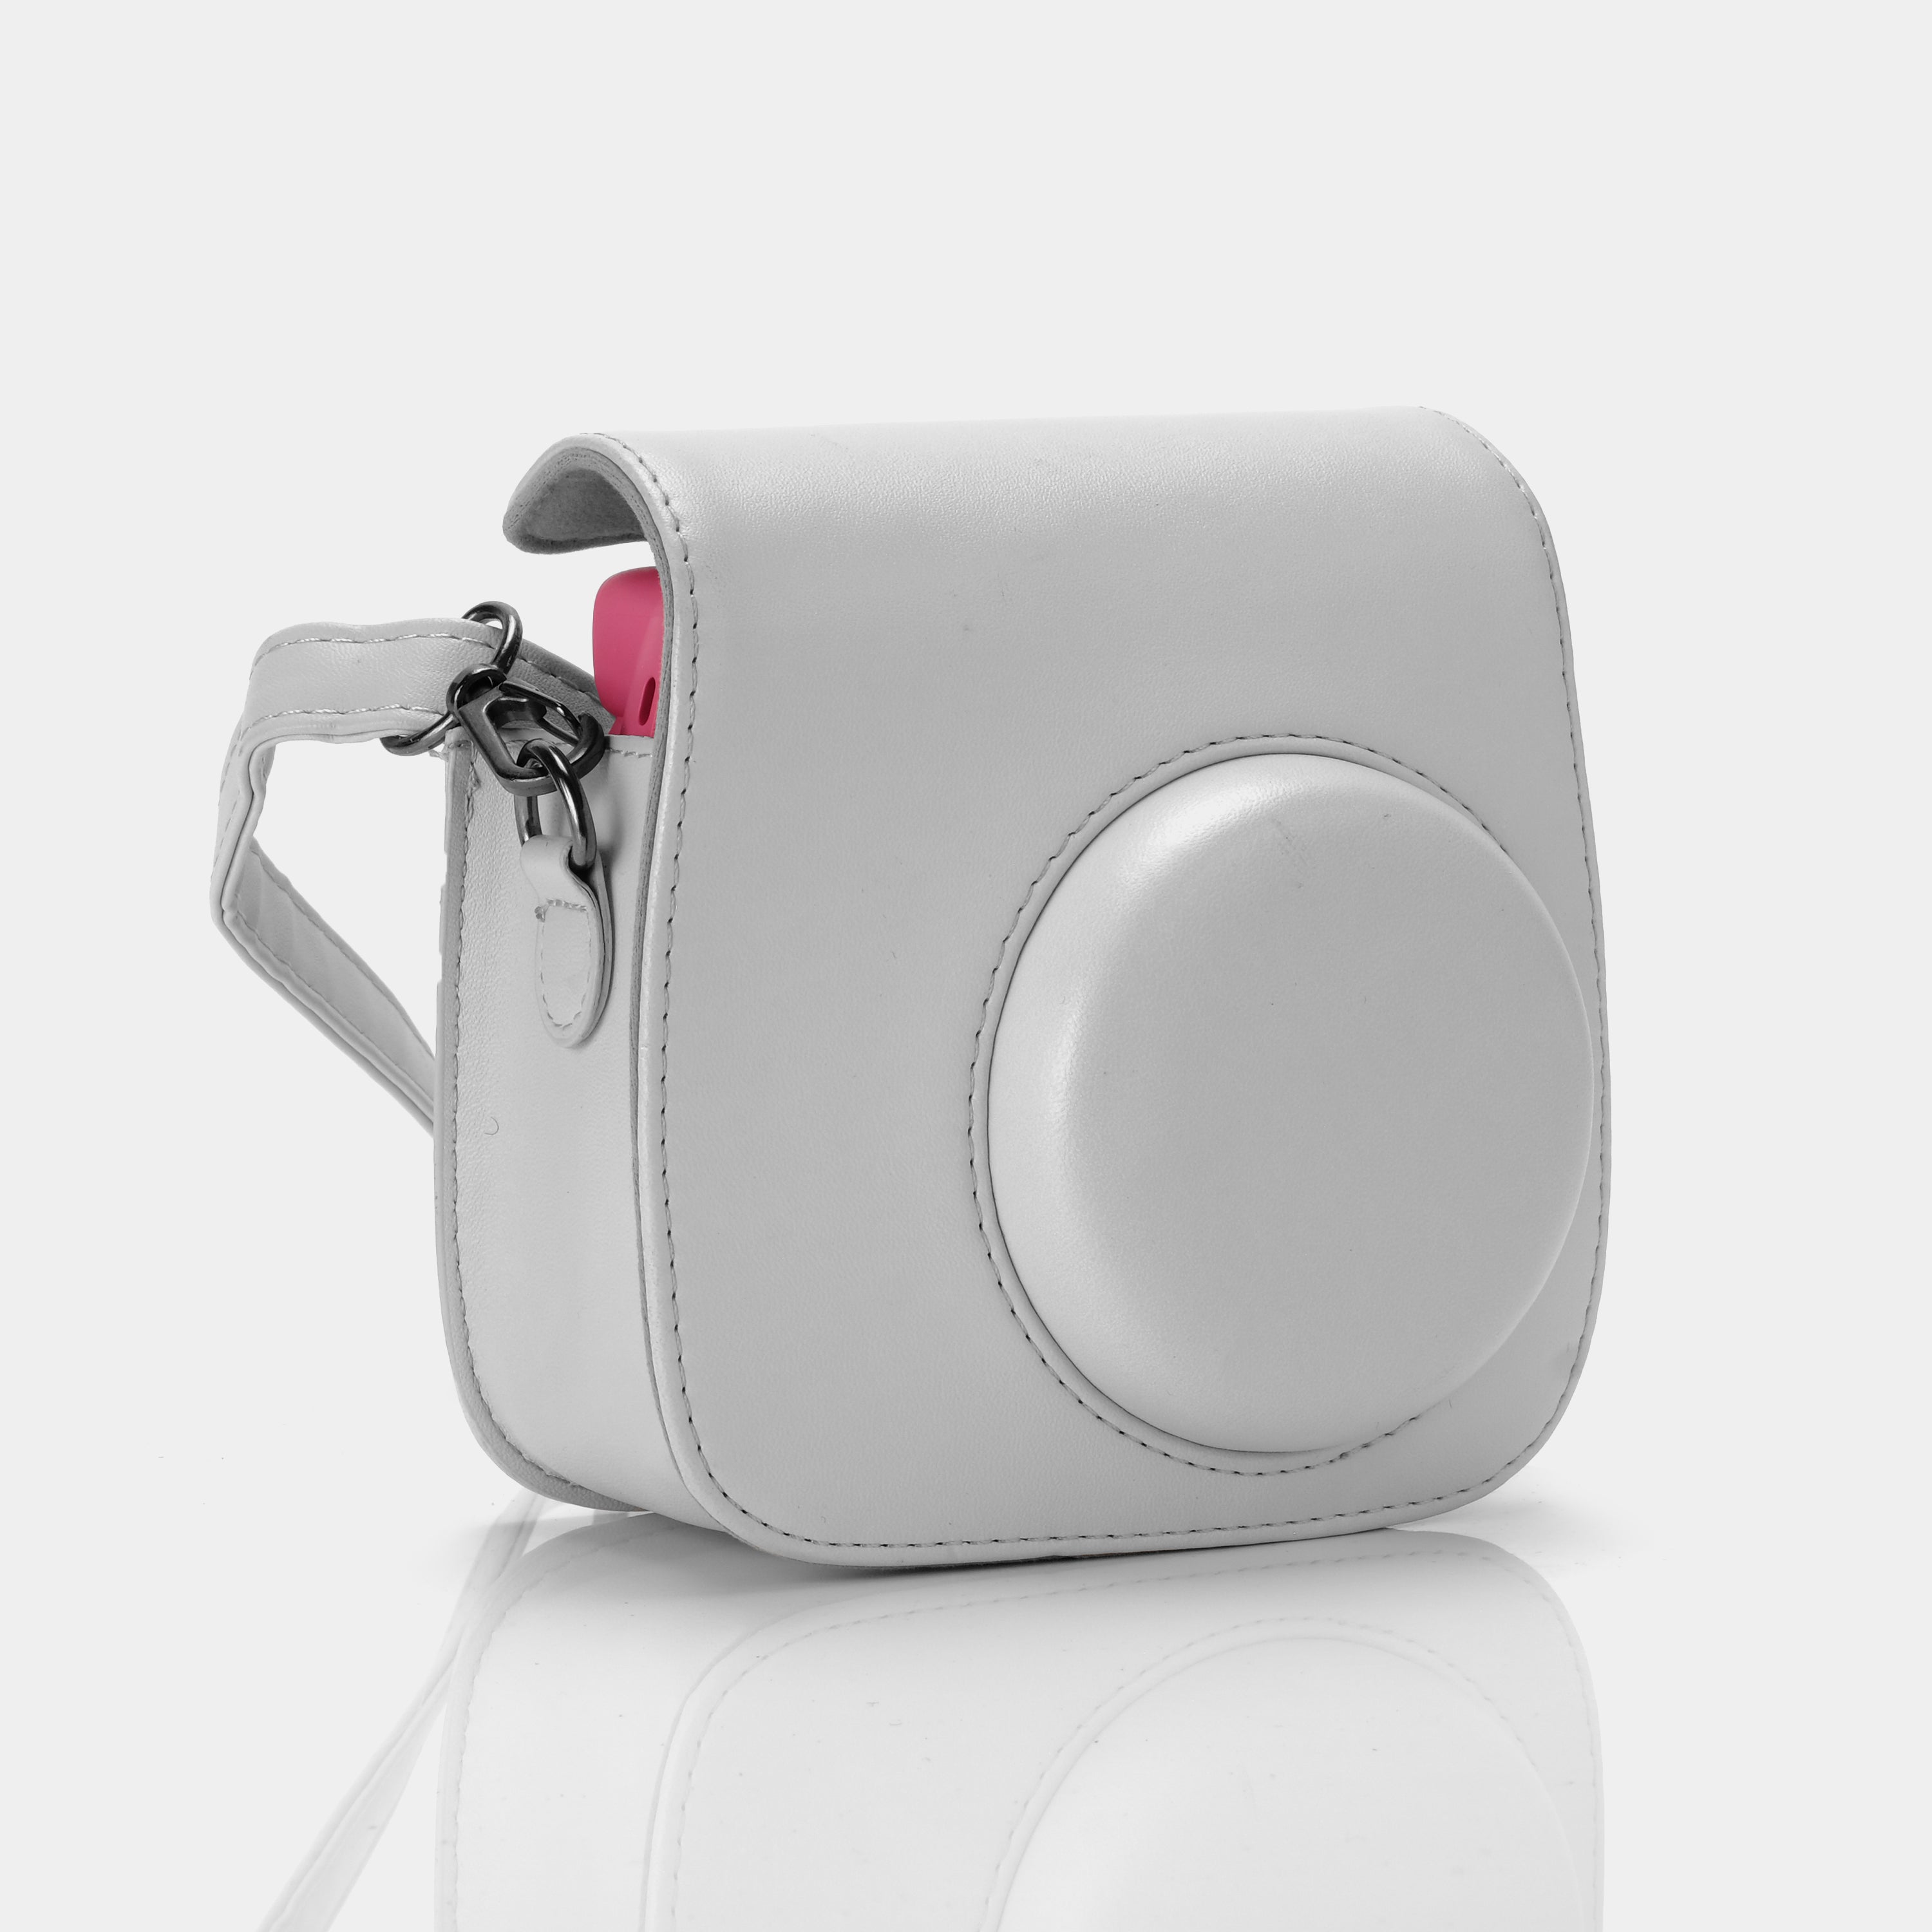 Fujifilm Instax Mini 8 Pink Instant Film Camera With Grey Bag - Refurbished